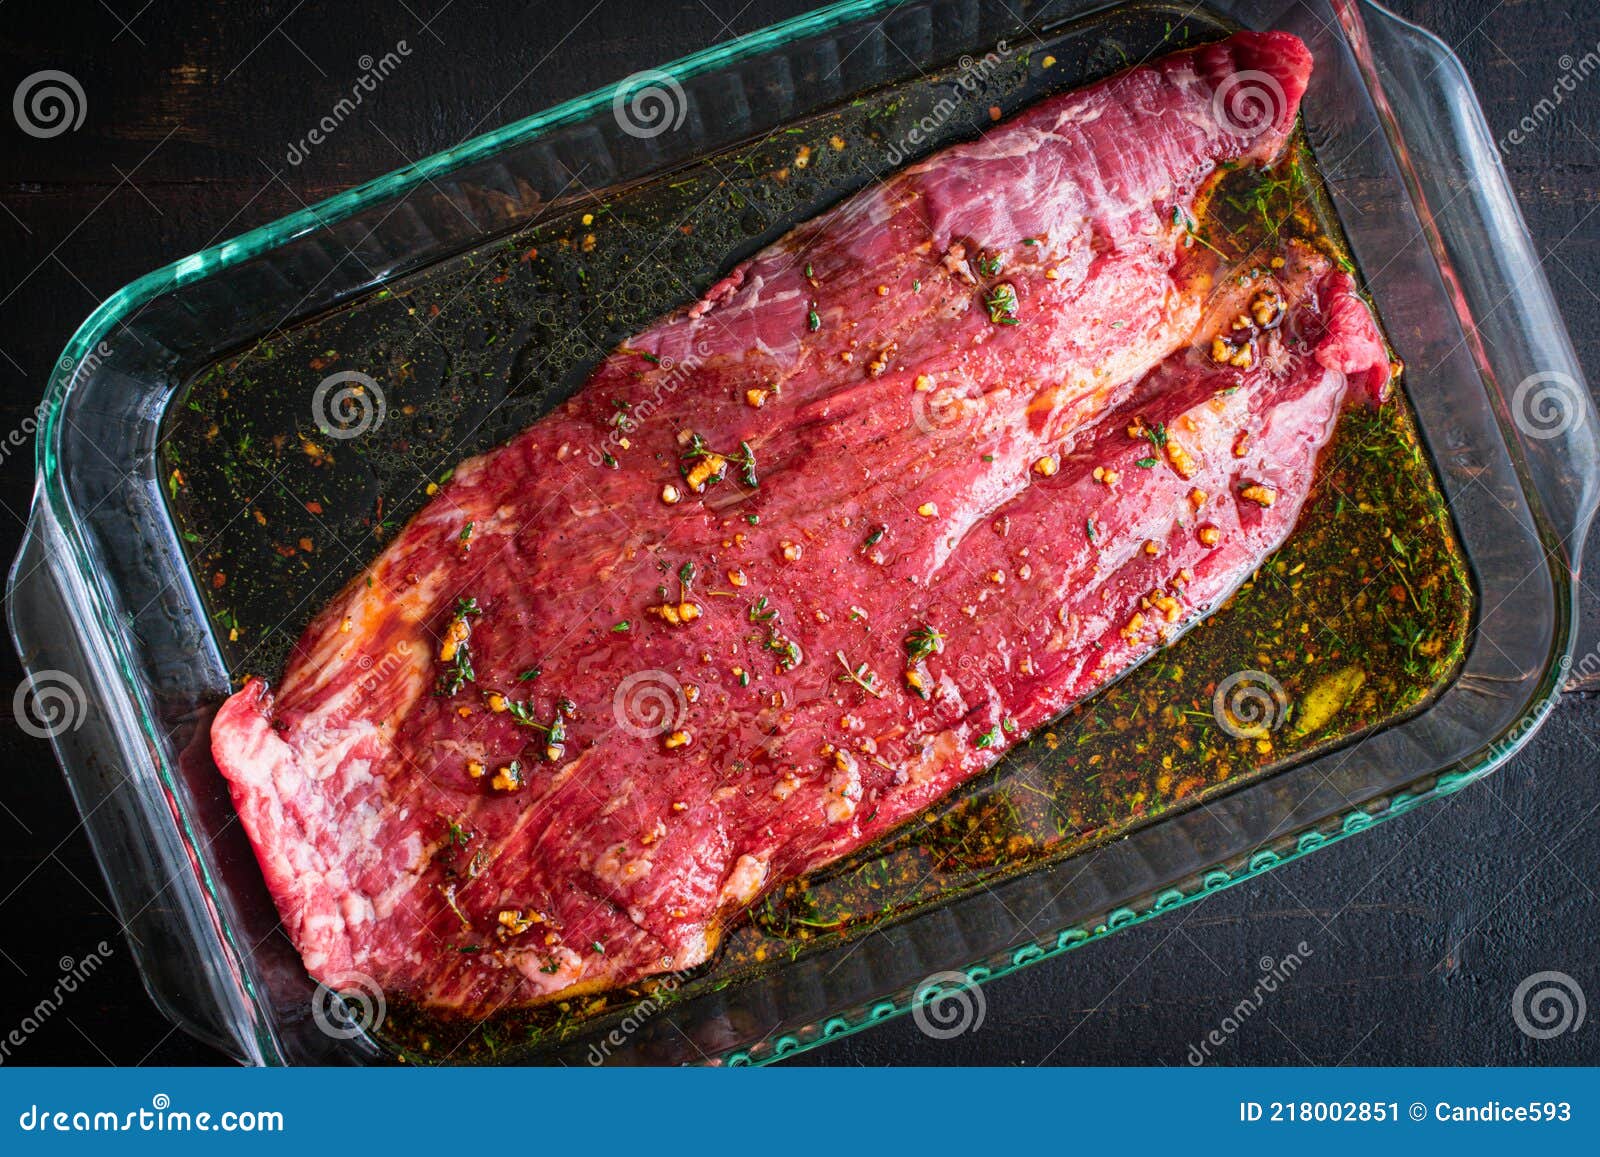 marinating flank steak in a glass dish